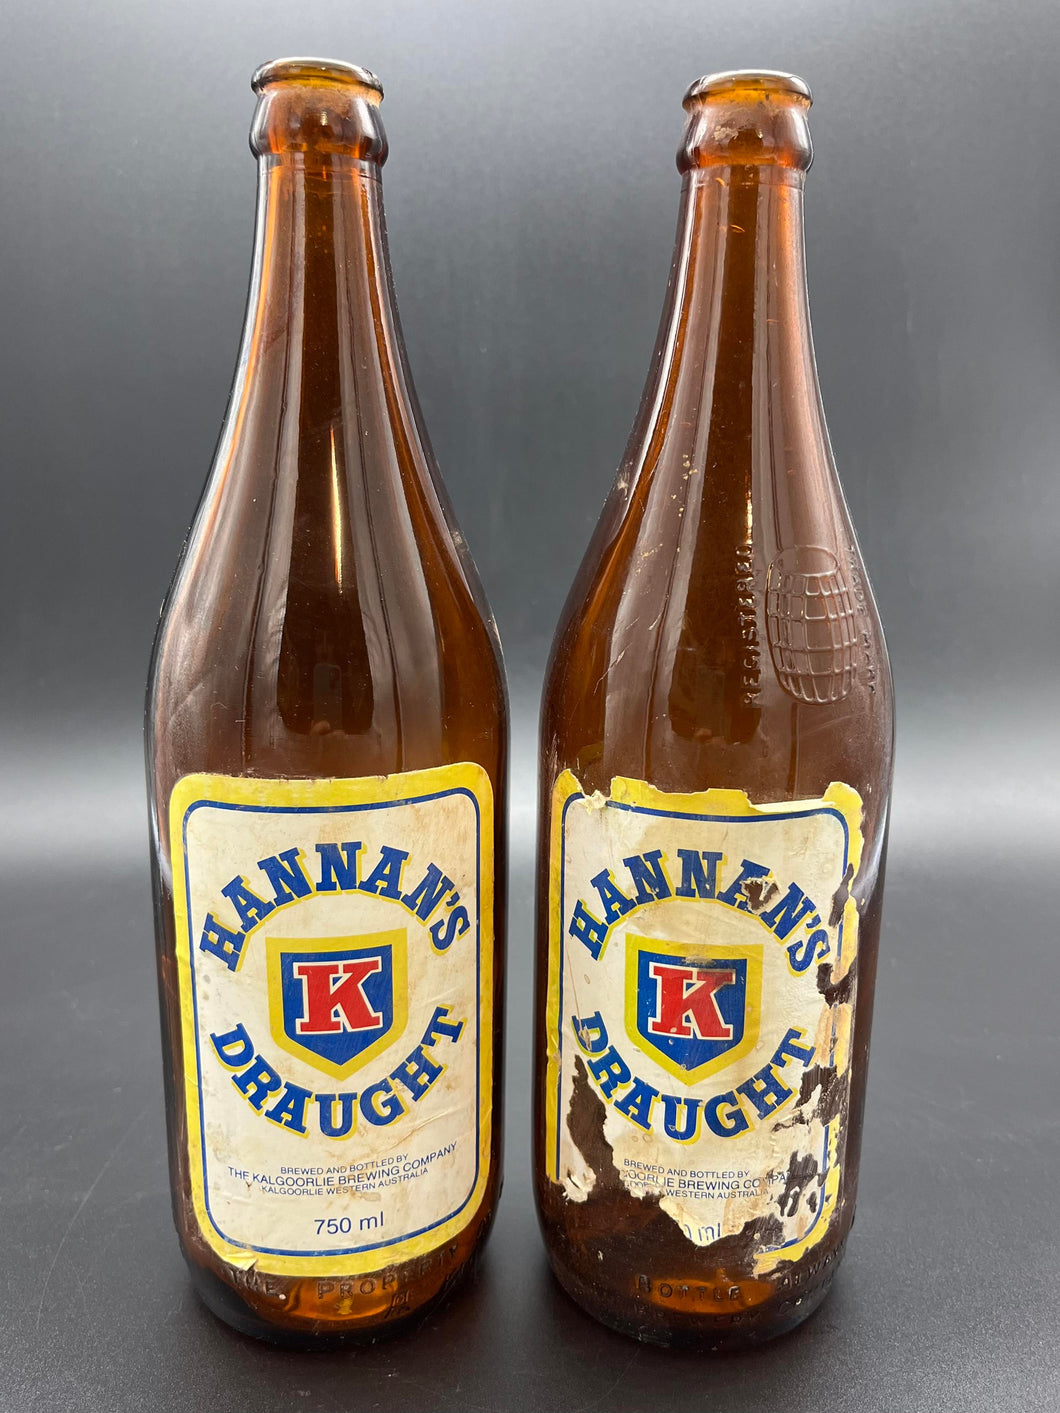 Hannan's Draught Crown Seal Beer Bottles - Lot of 2